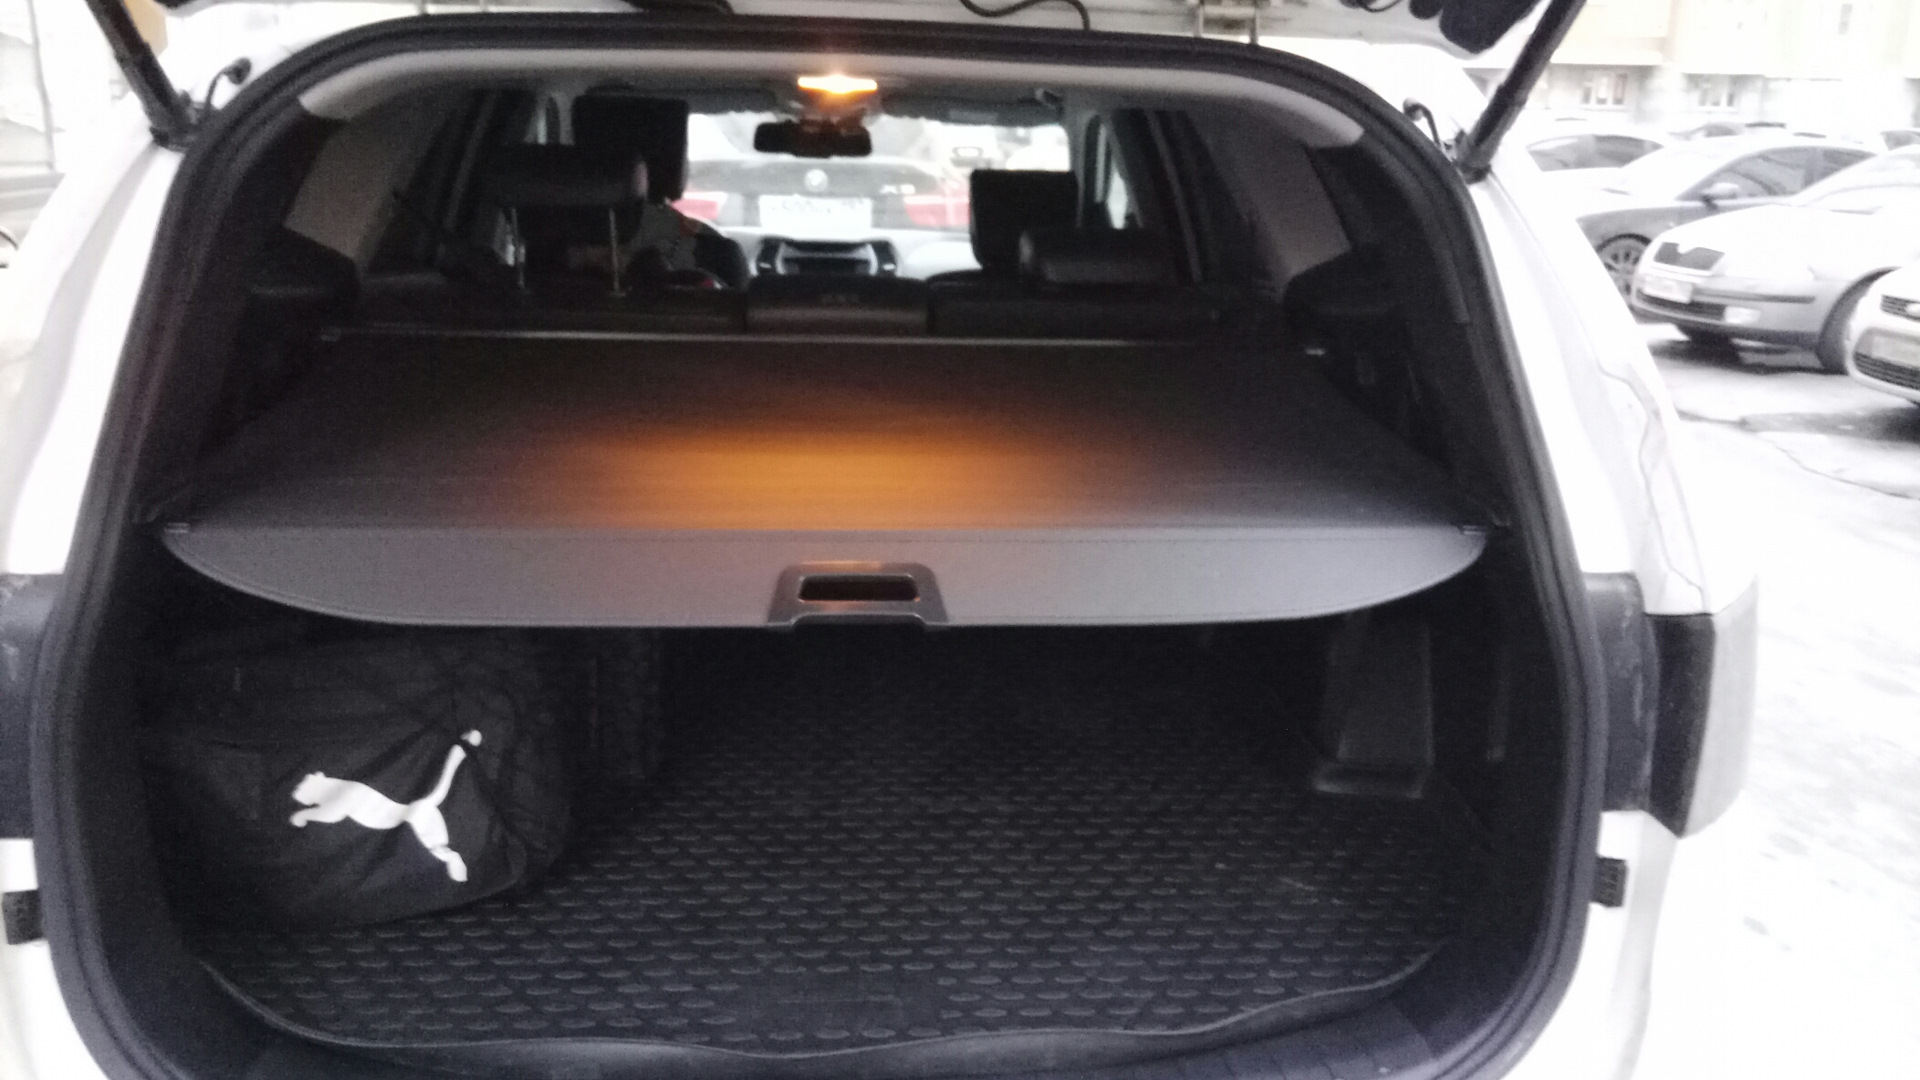 Шторка санта фе. Шторка багажника Hyundai Santa Fe 3. Багажник Хендай Санта Фе 2013. Полка в багажник Санта Фе 3. Шторка багажника Санта Фе 4.